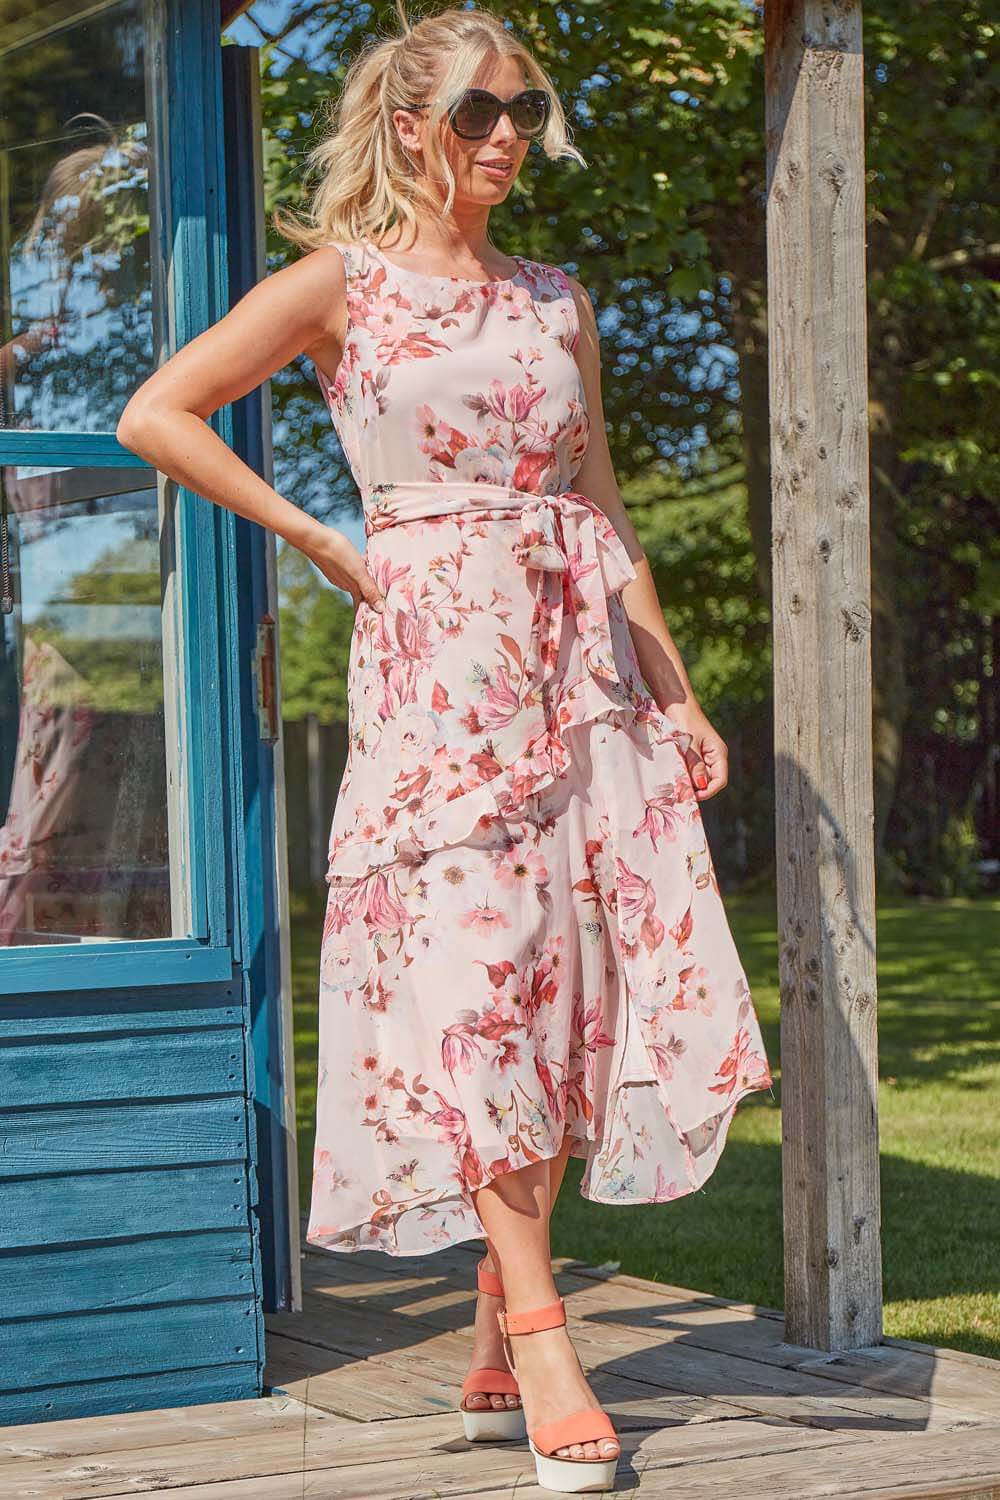 Floral Print Frill Midi Dress in Pink - Roman Originals UK